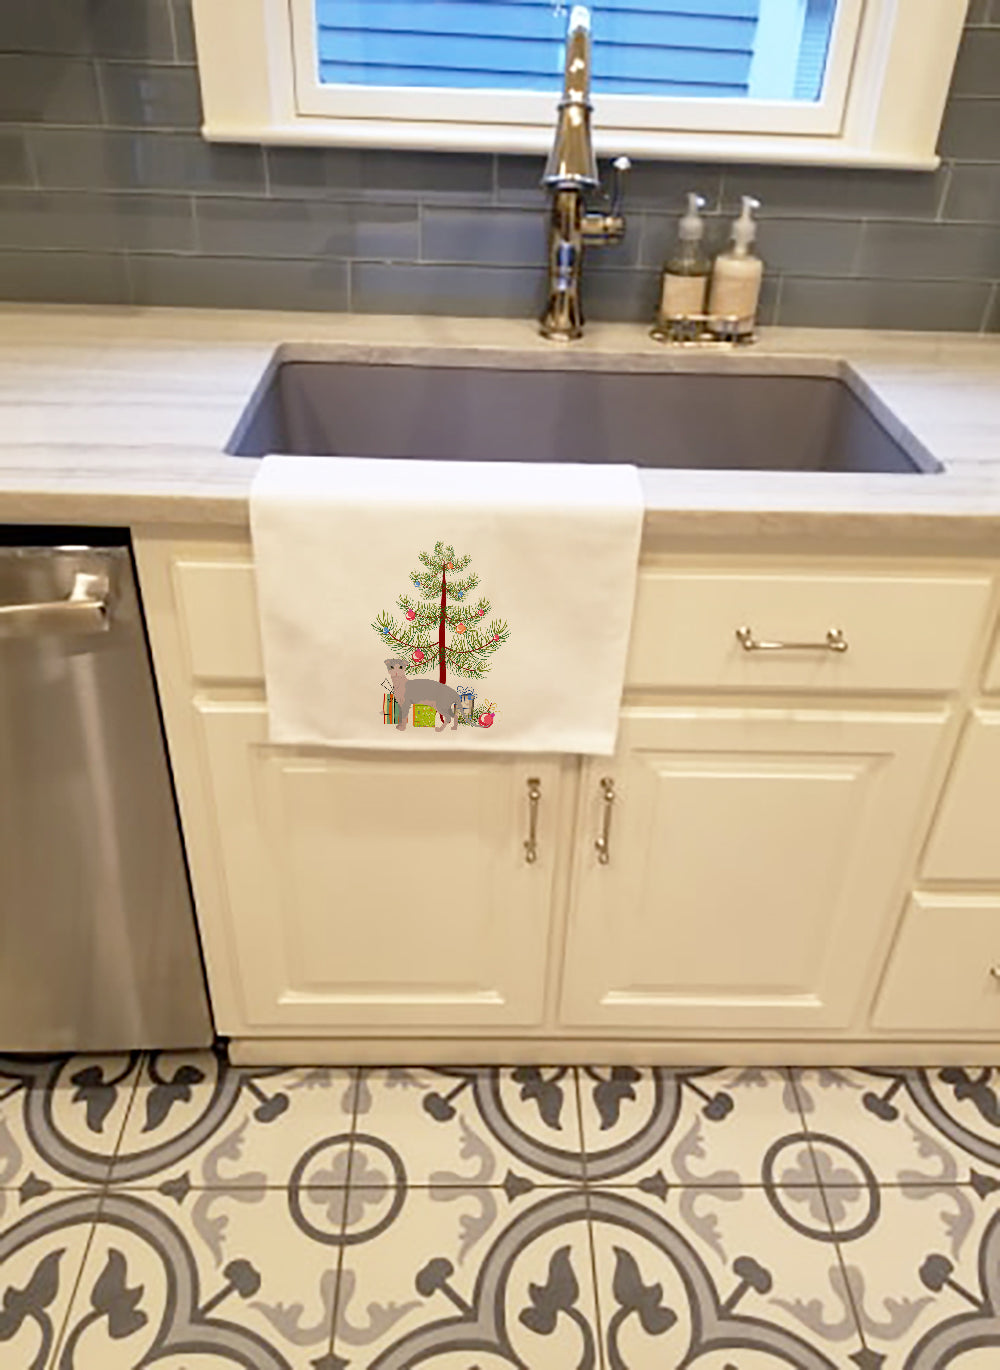 Buy this Ukrainian Levkoy Cat Merry Christmas White Kitchen Towel Set of 2